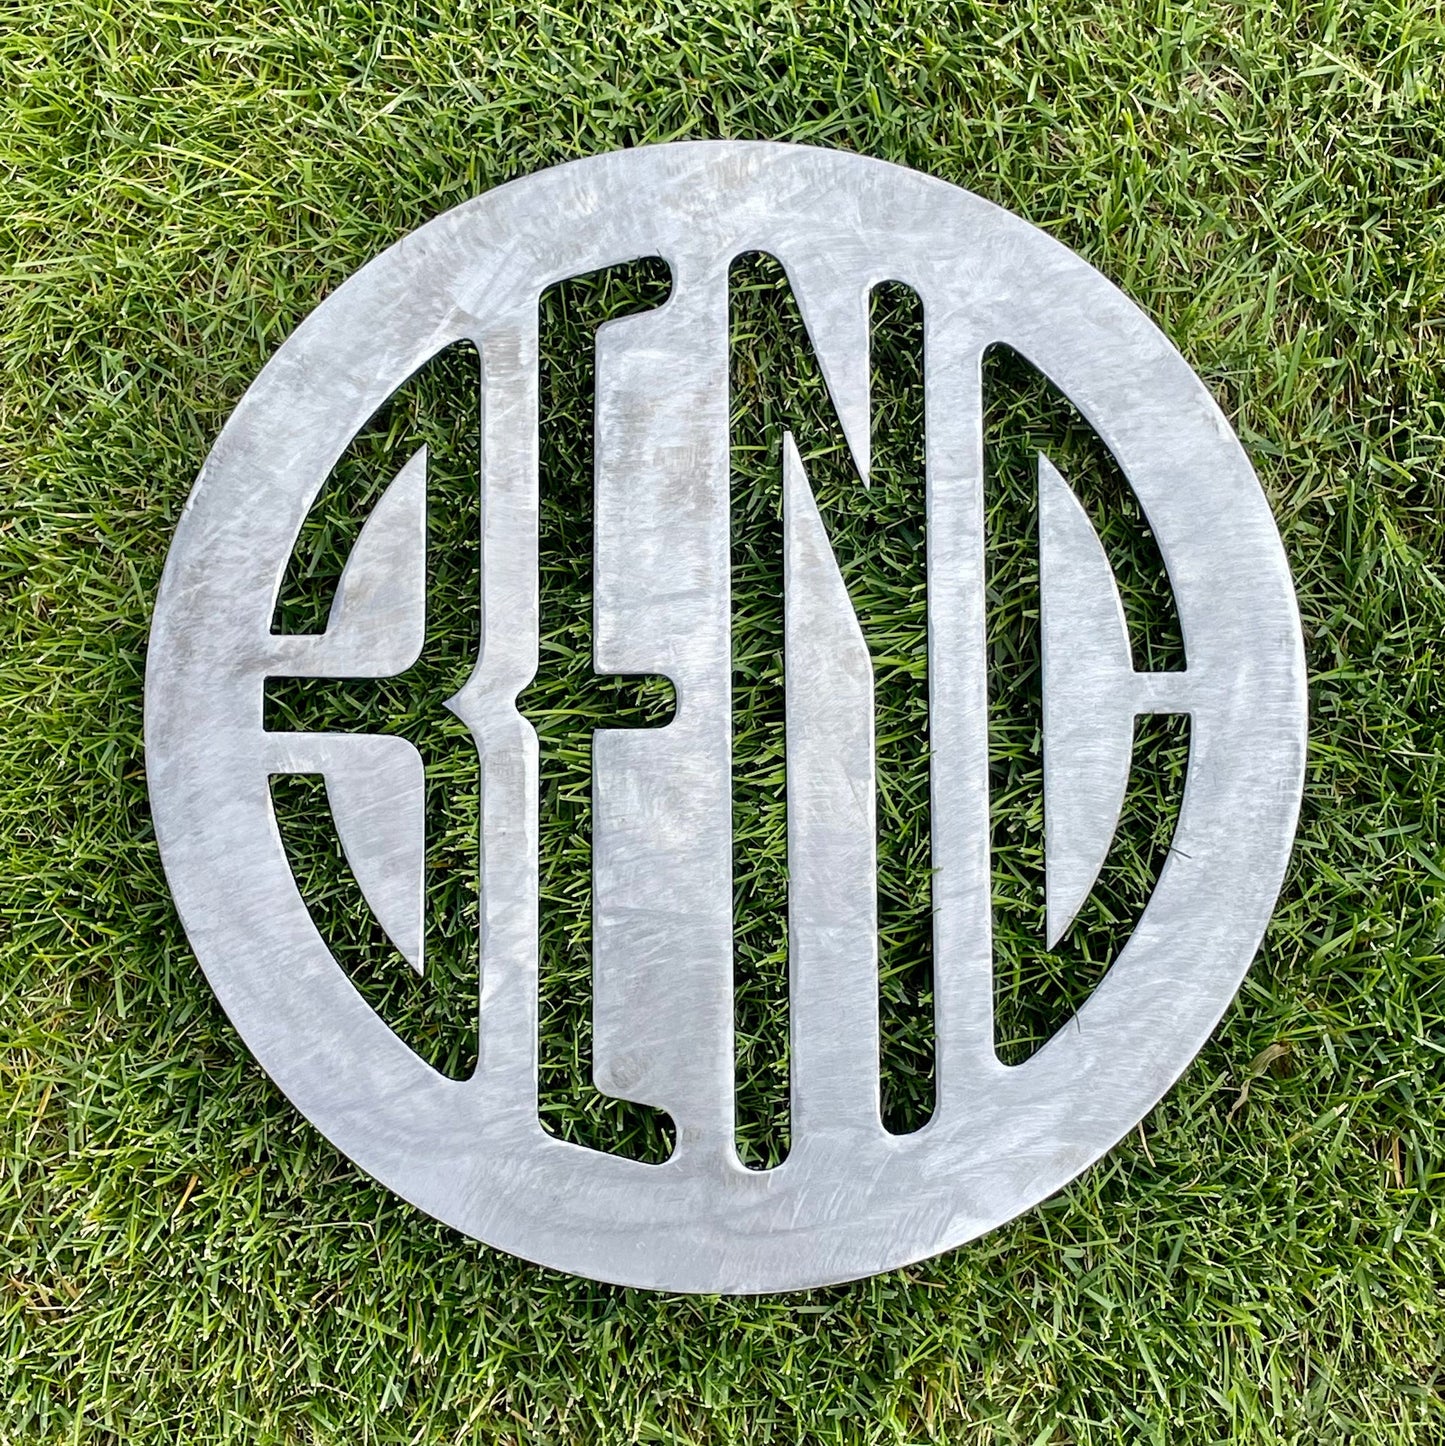 Bend Oregon Metal Sign by Motomattick Designs and LeeMo Designs in Bend, Oregon